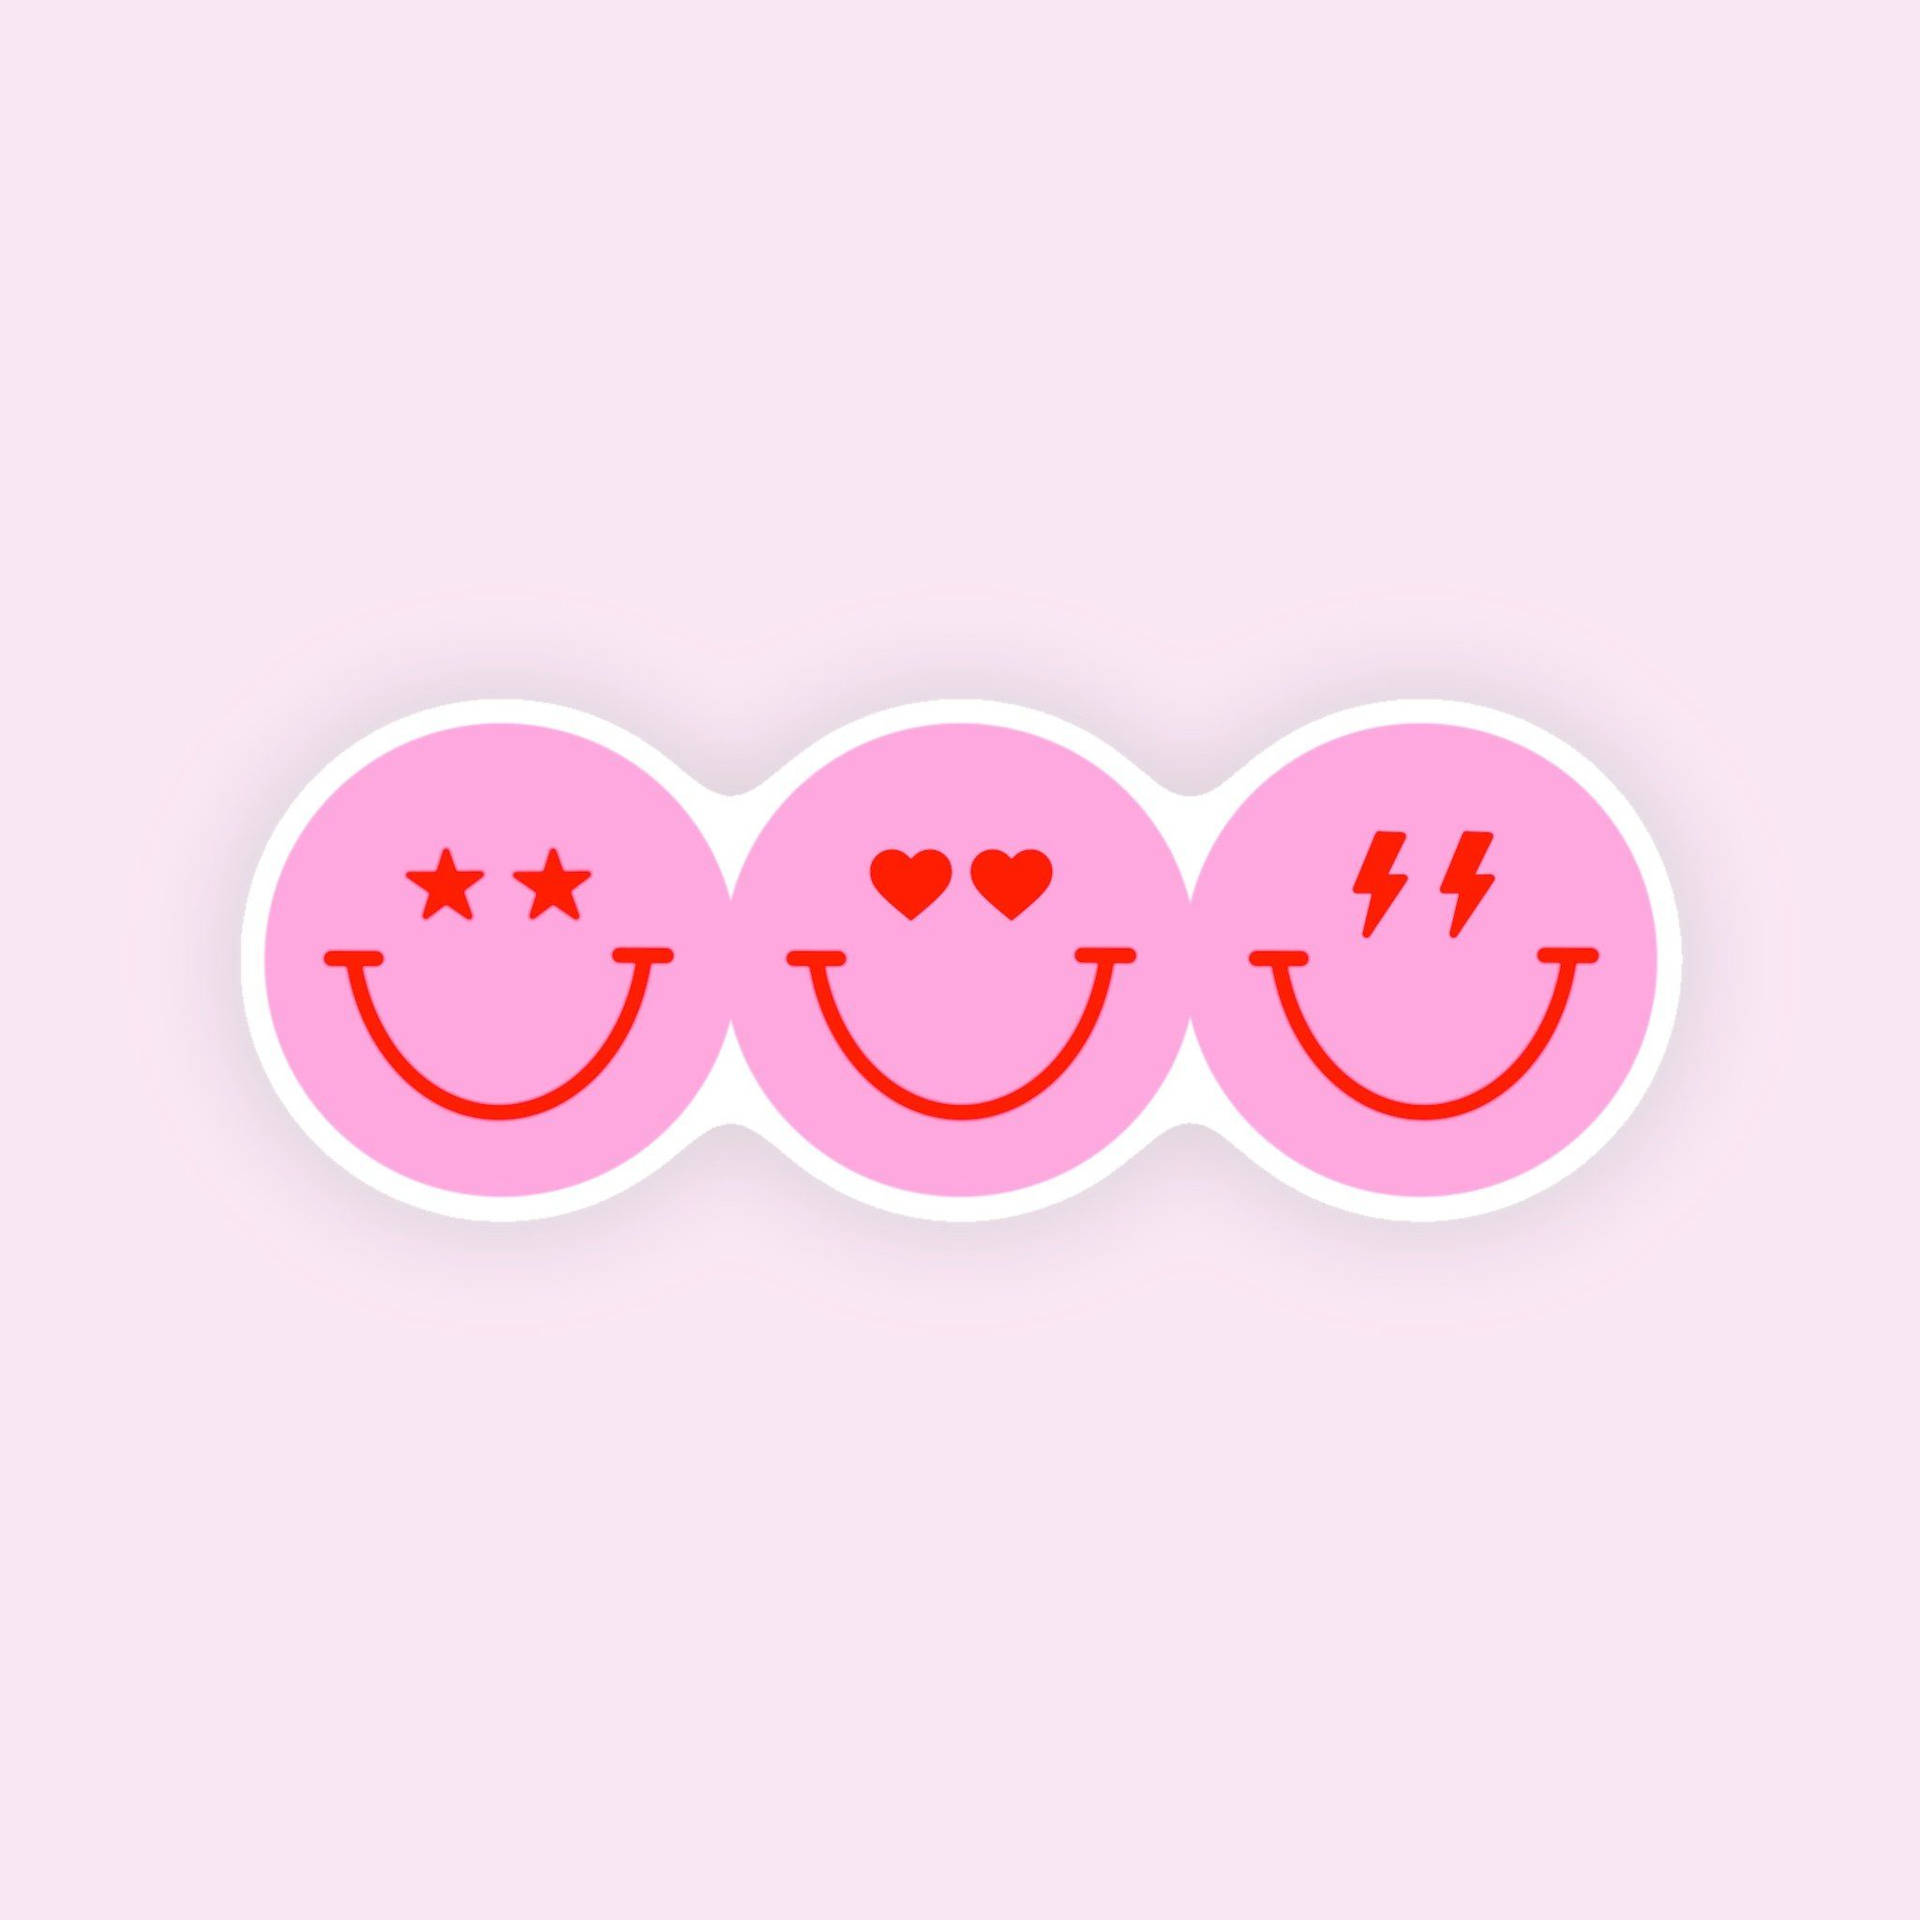 Free Preppy Smiley Face Wallpaper Downloads, [100+] Preppy Smiley Face  Wallpapers for FREE 